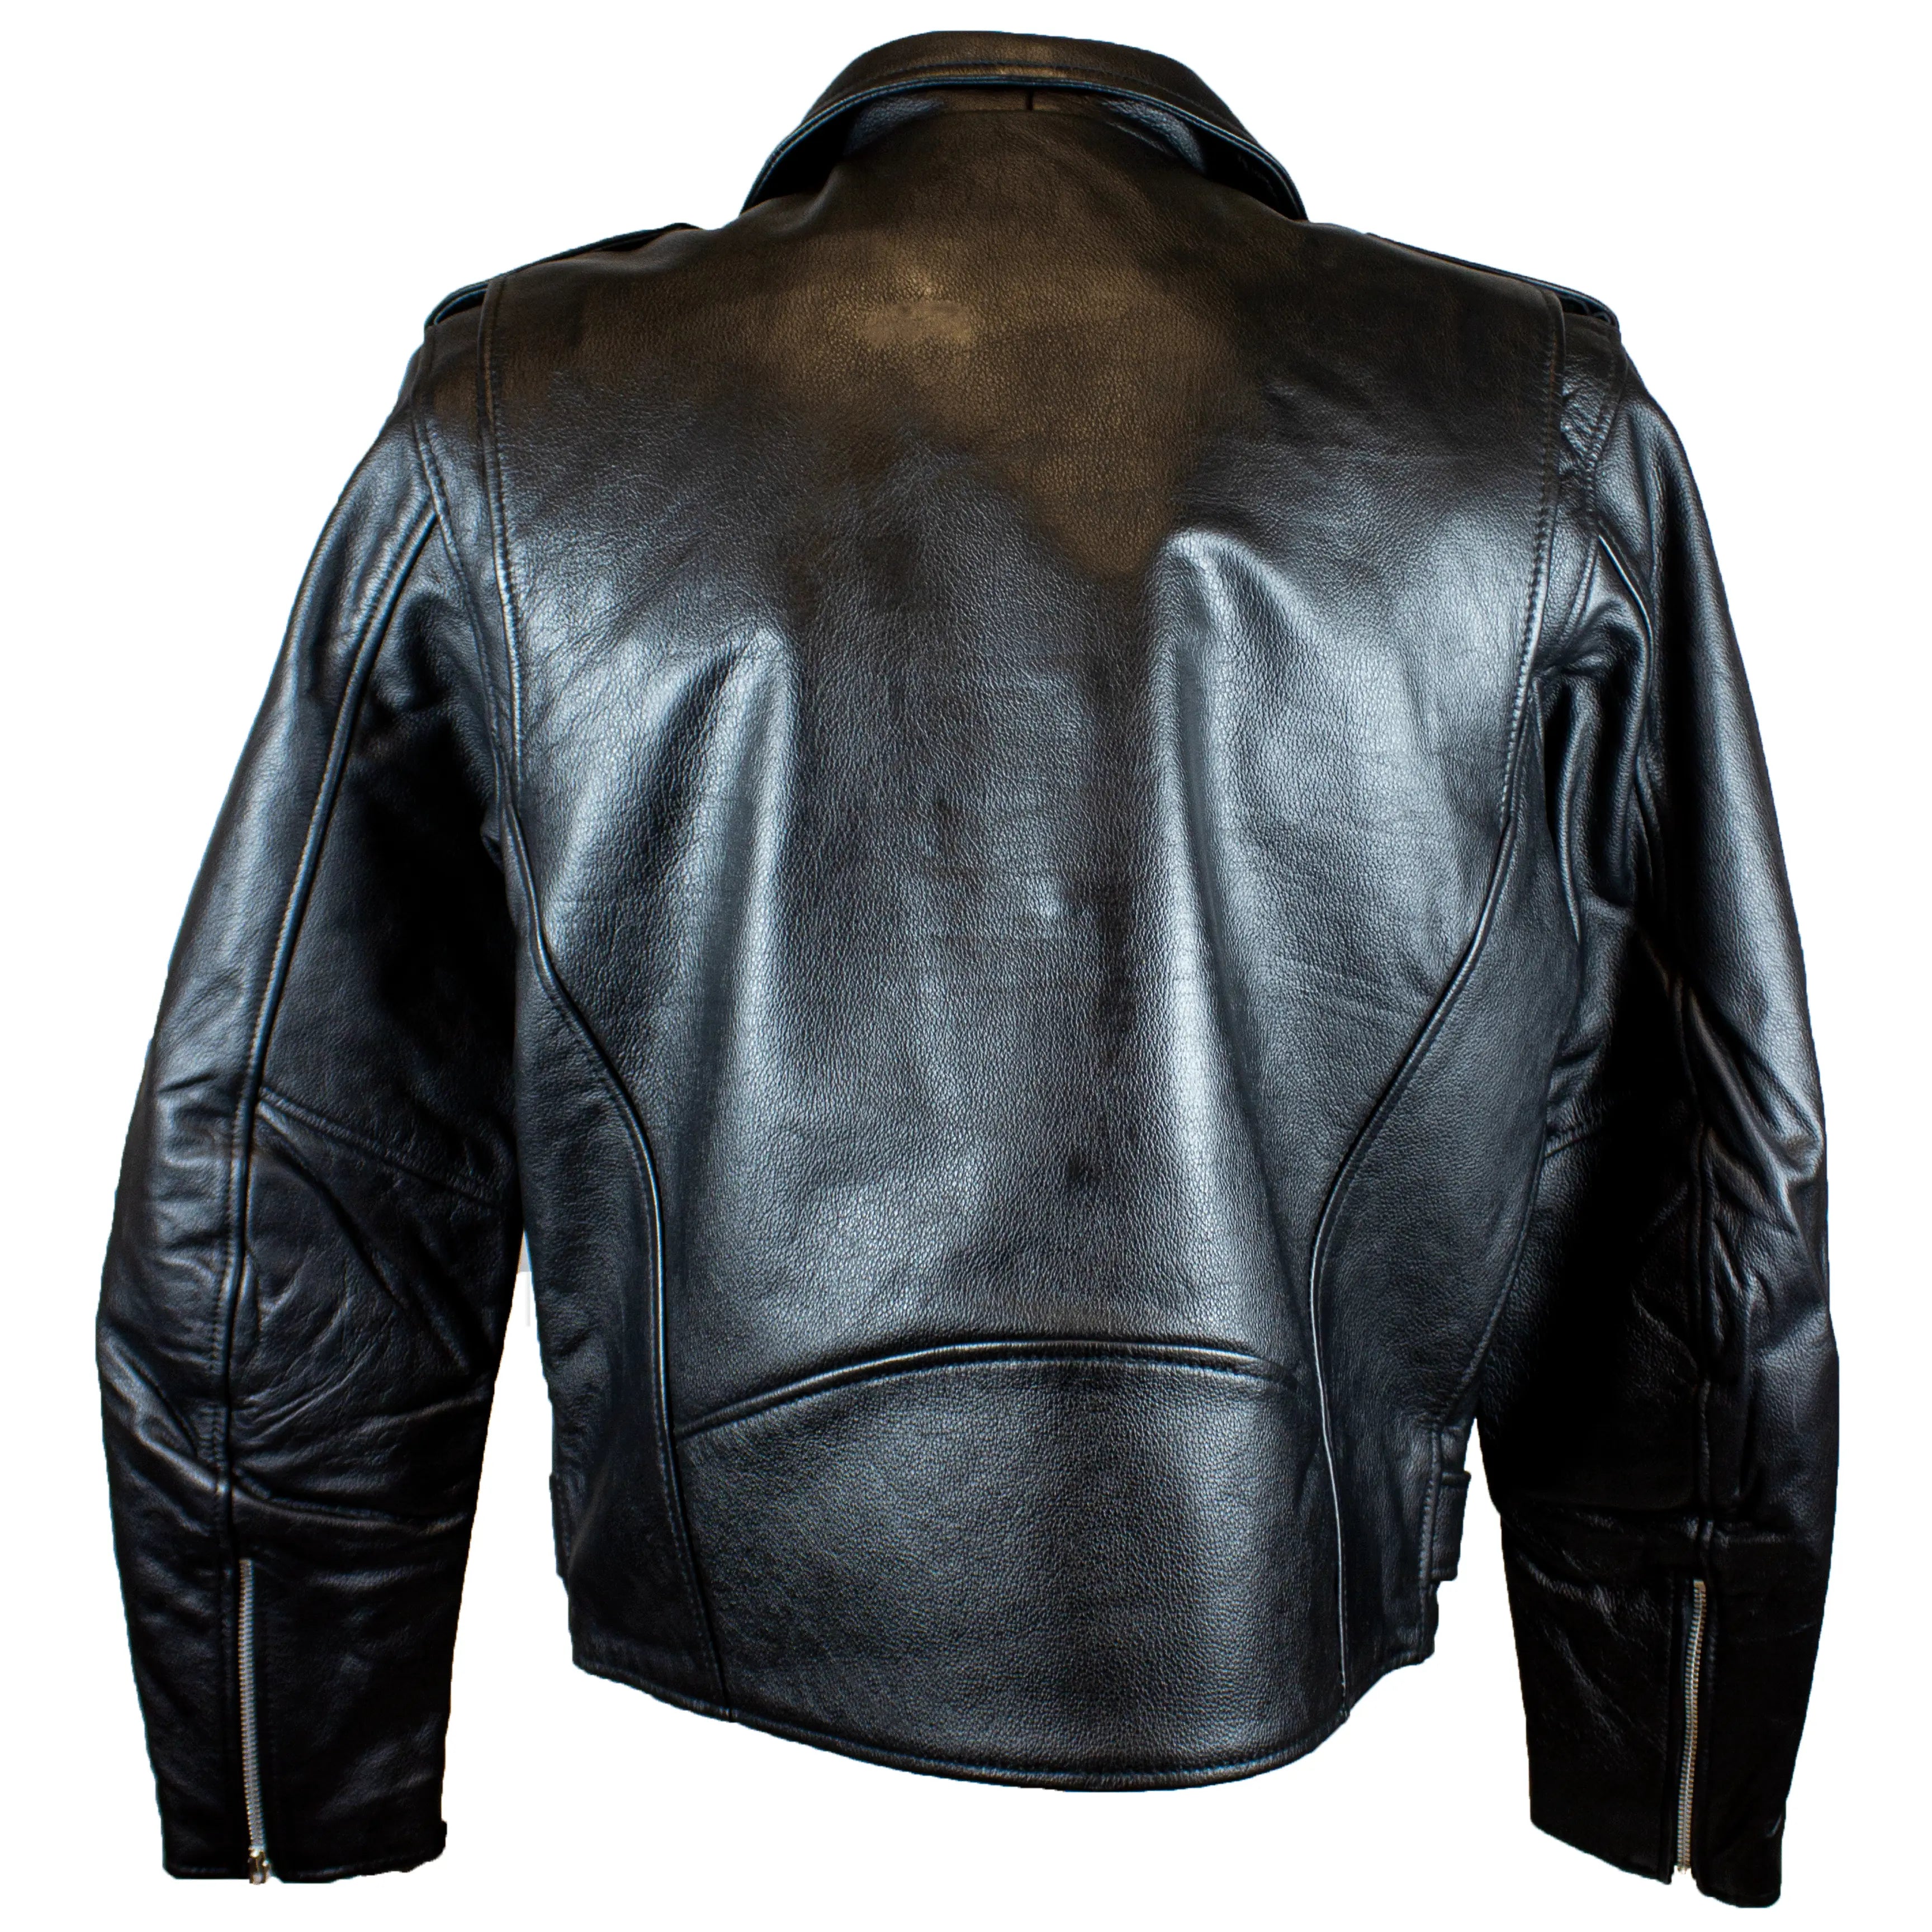 BOL/Open Road Men's Motorcycle Leather Jacket Men's Motorcycle Jackets Boutique of Leathers/Open Road